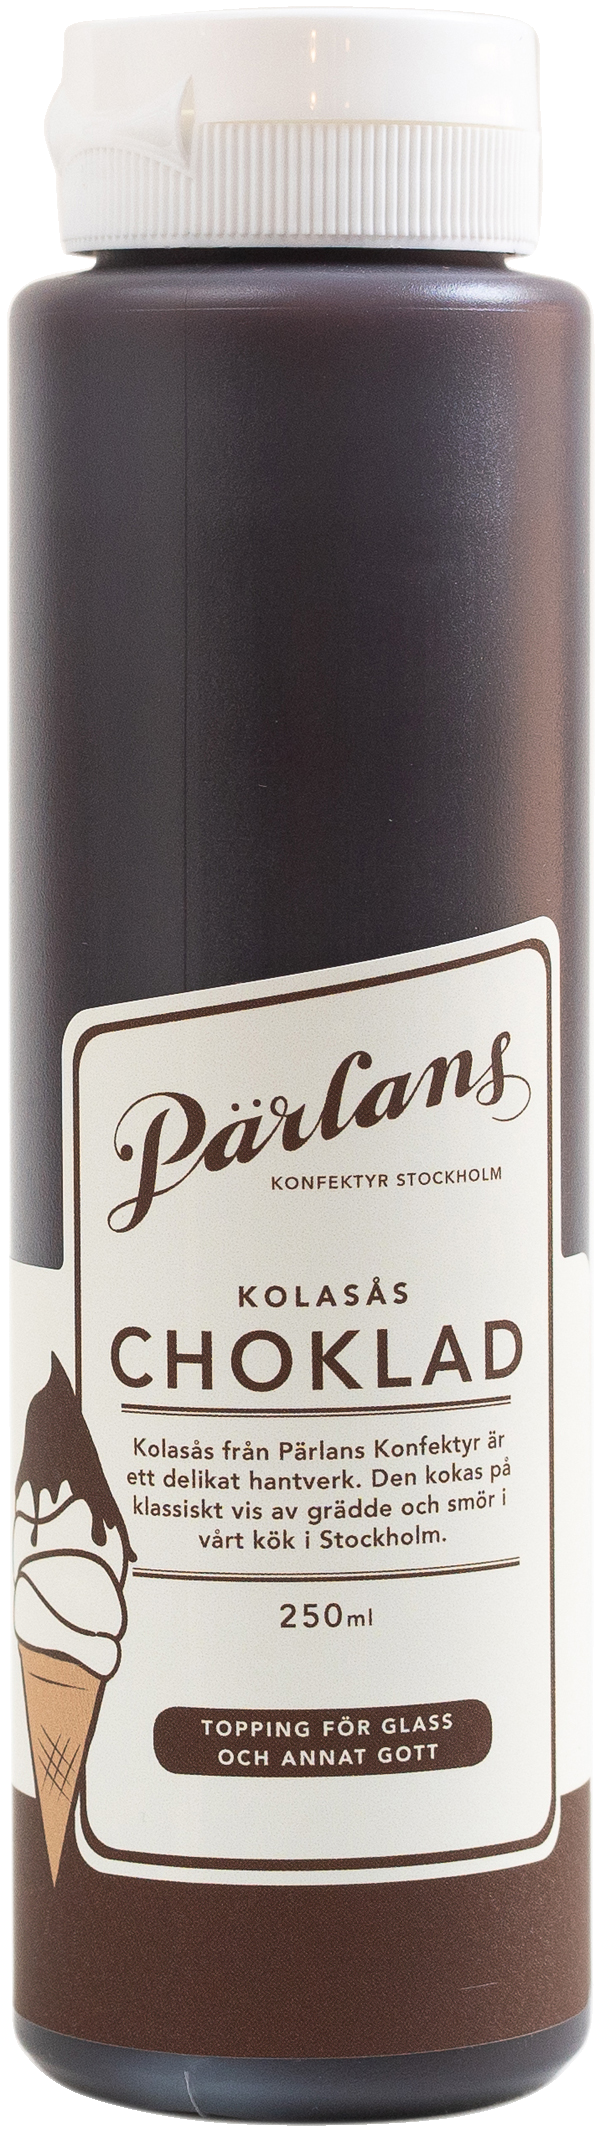 Kolasås choklad 250 ml